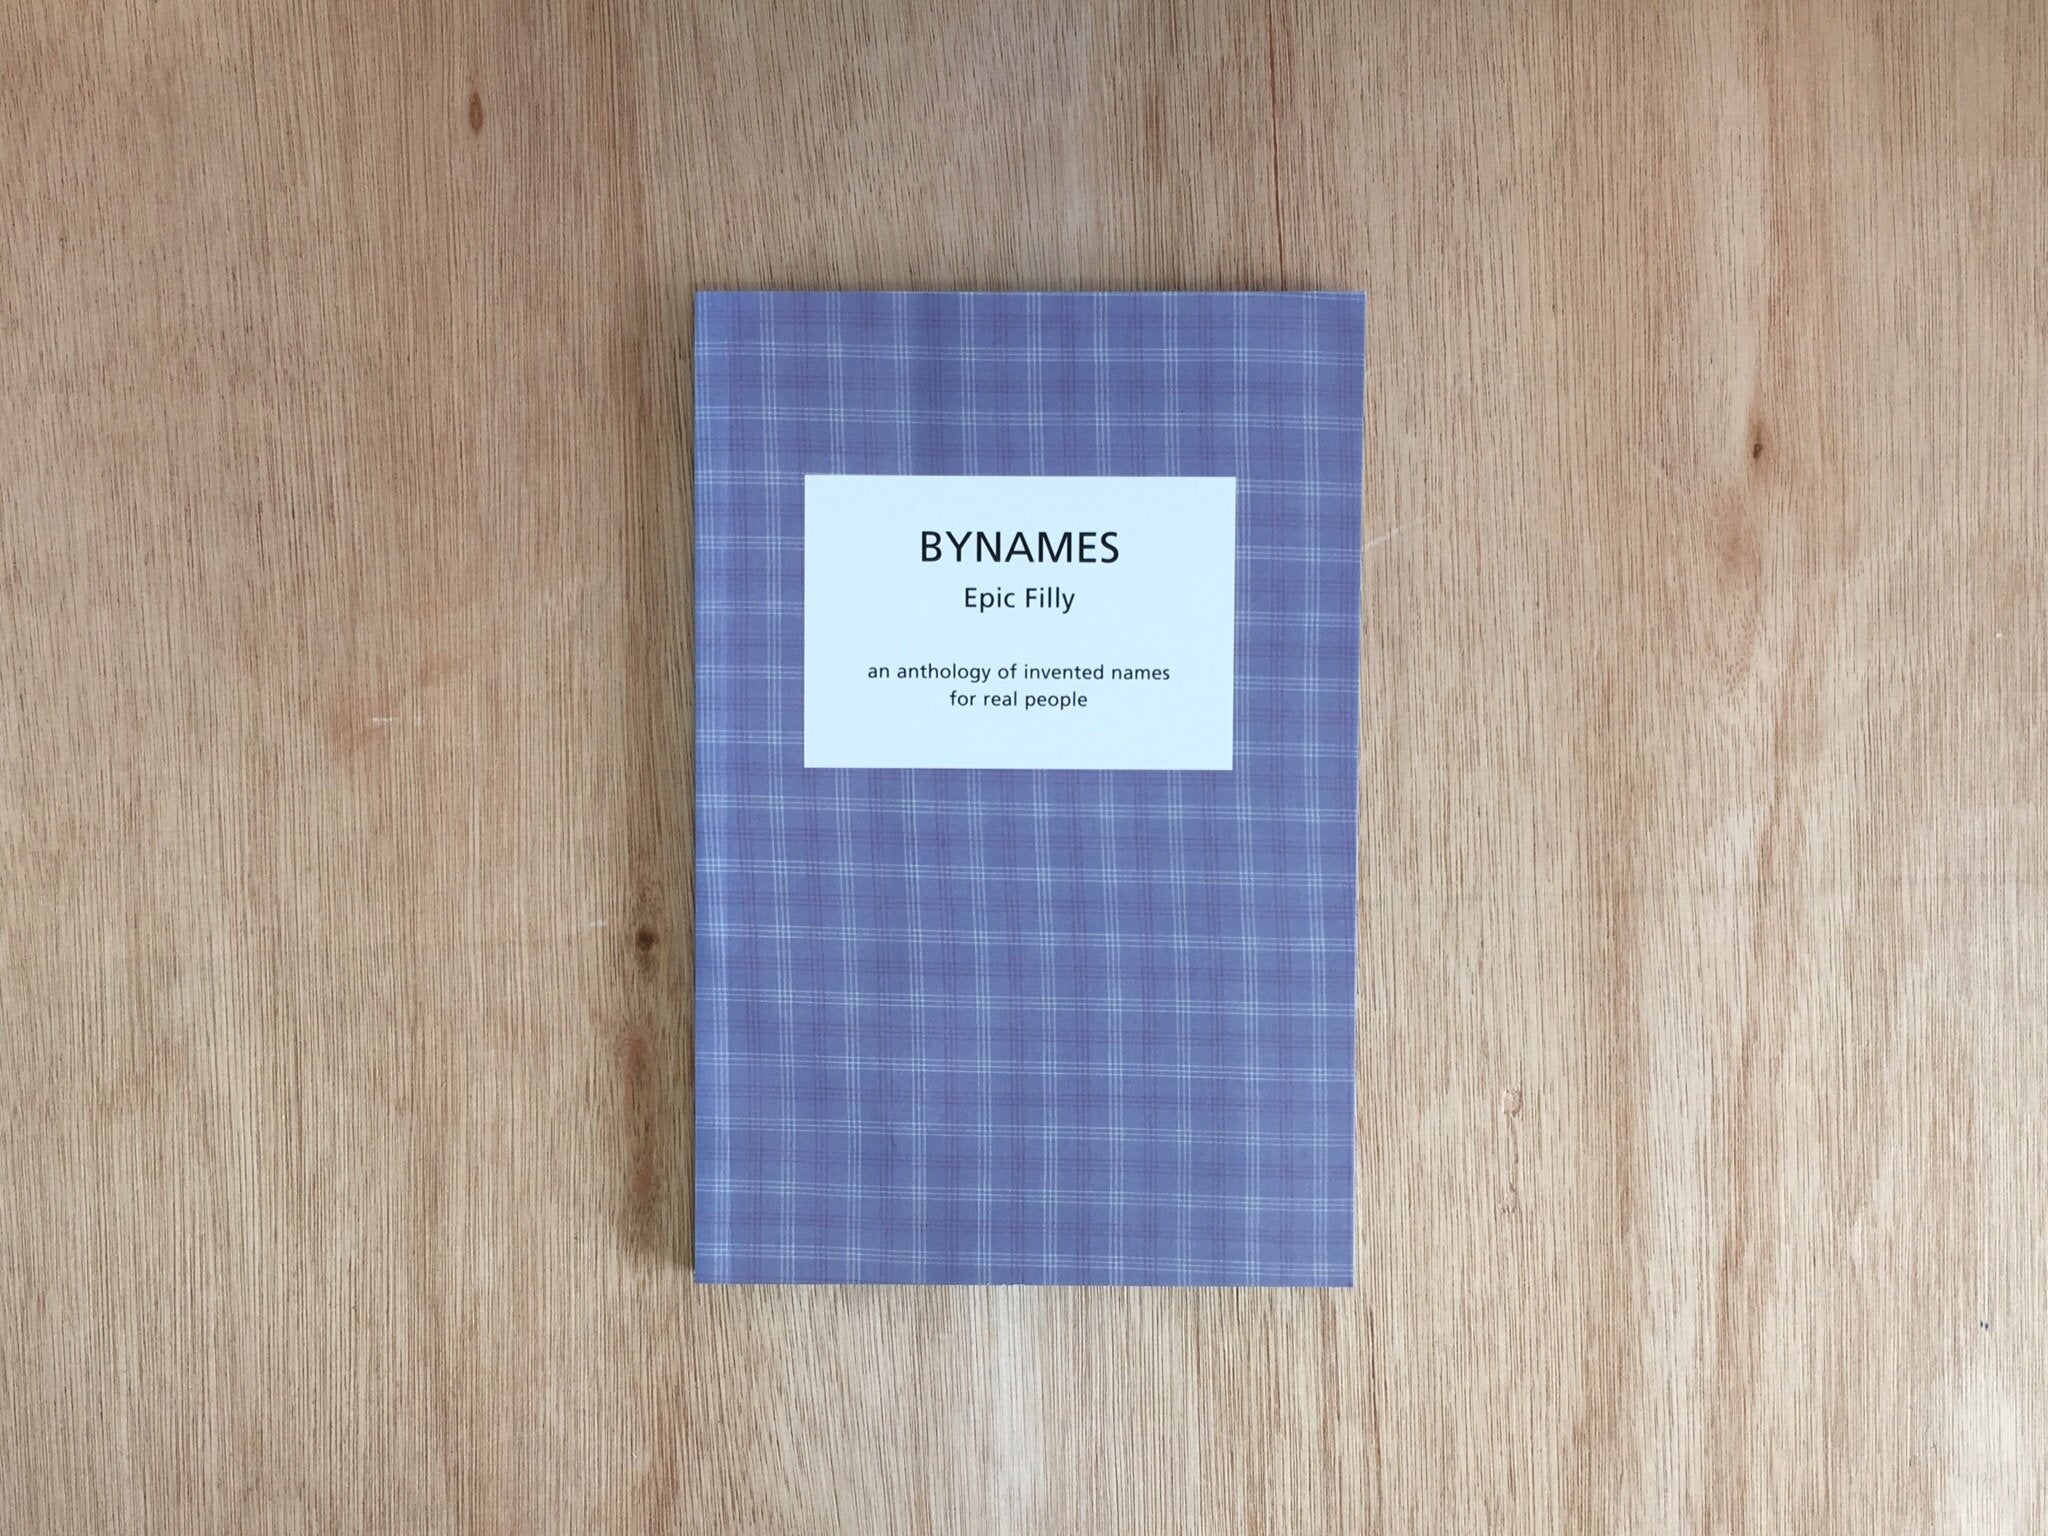 BYNAMES by Alec Finlay